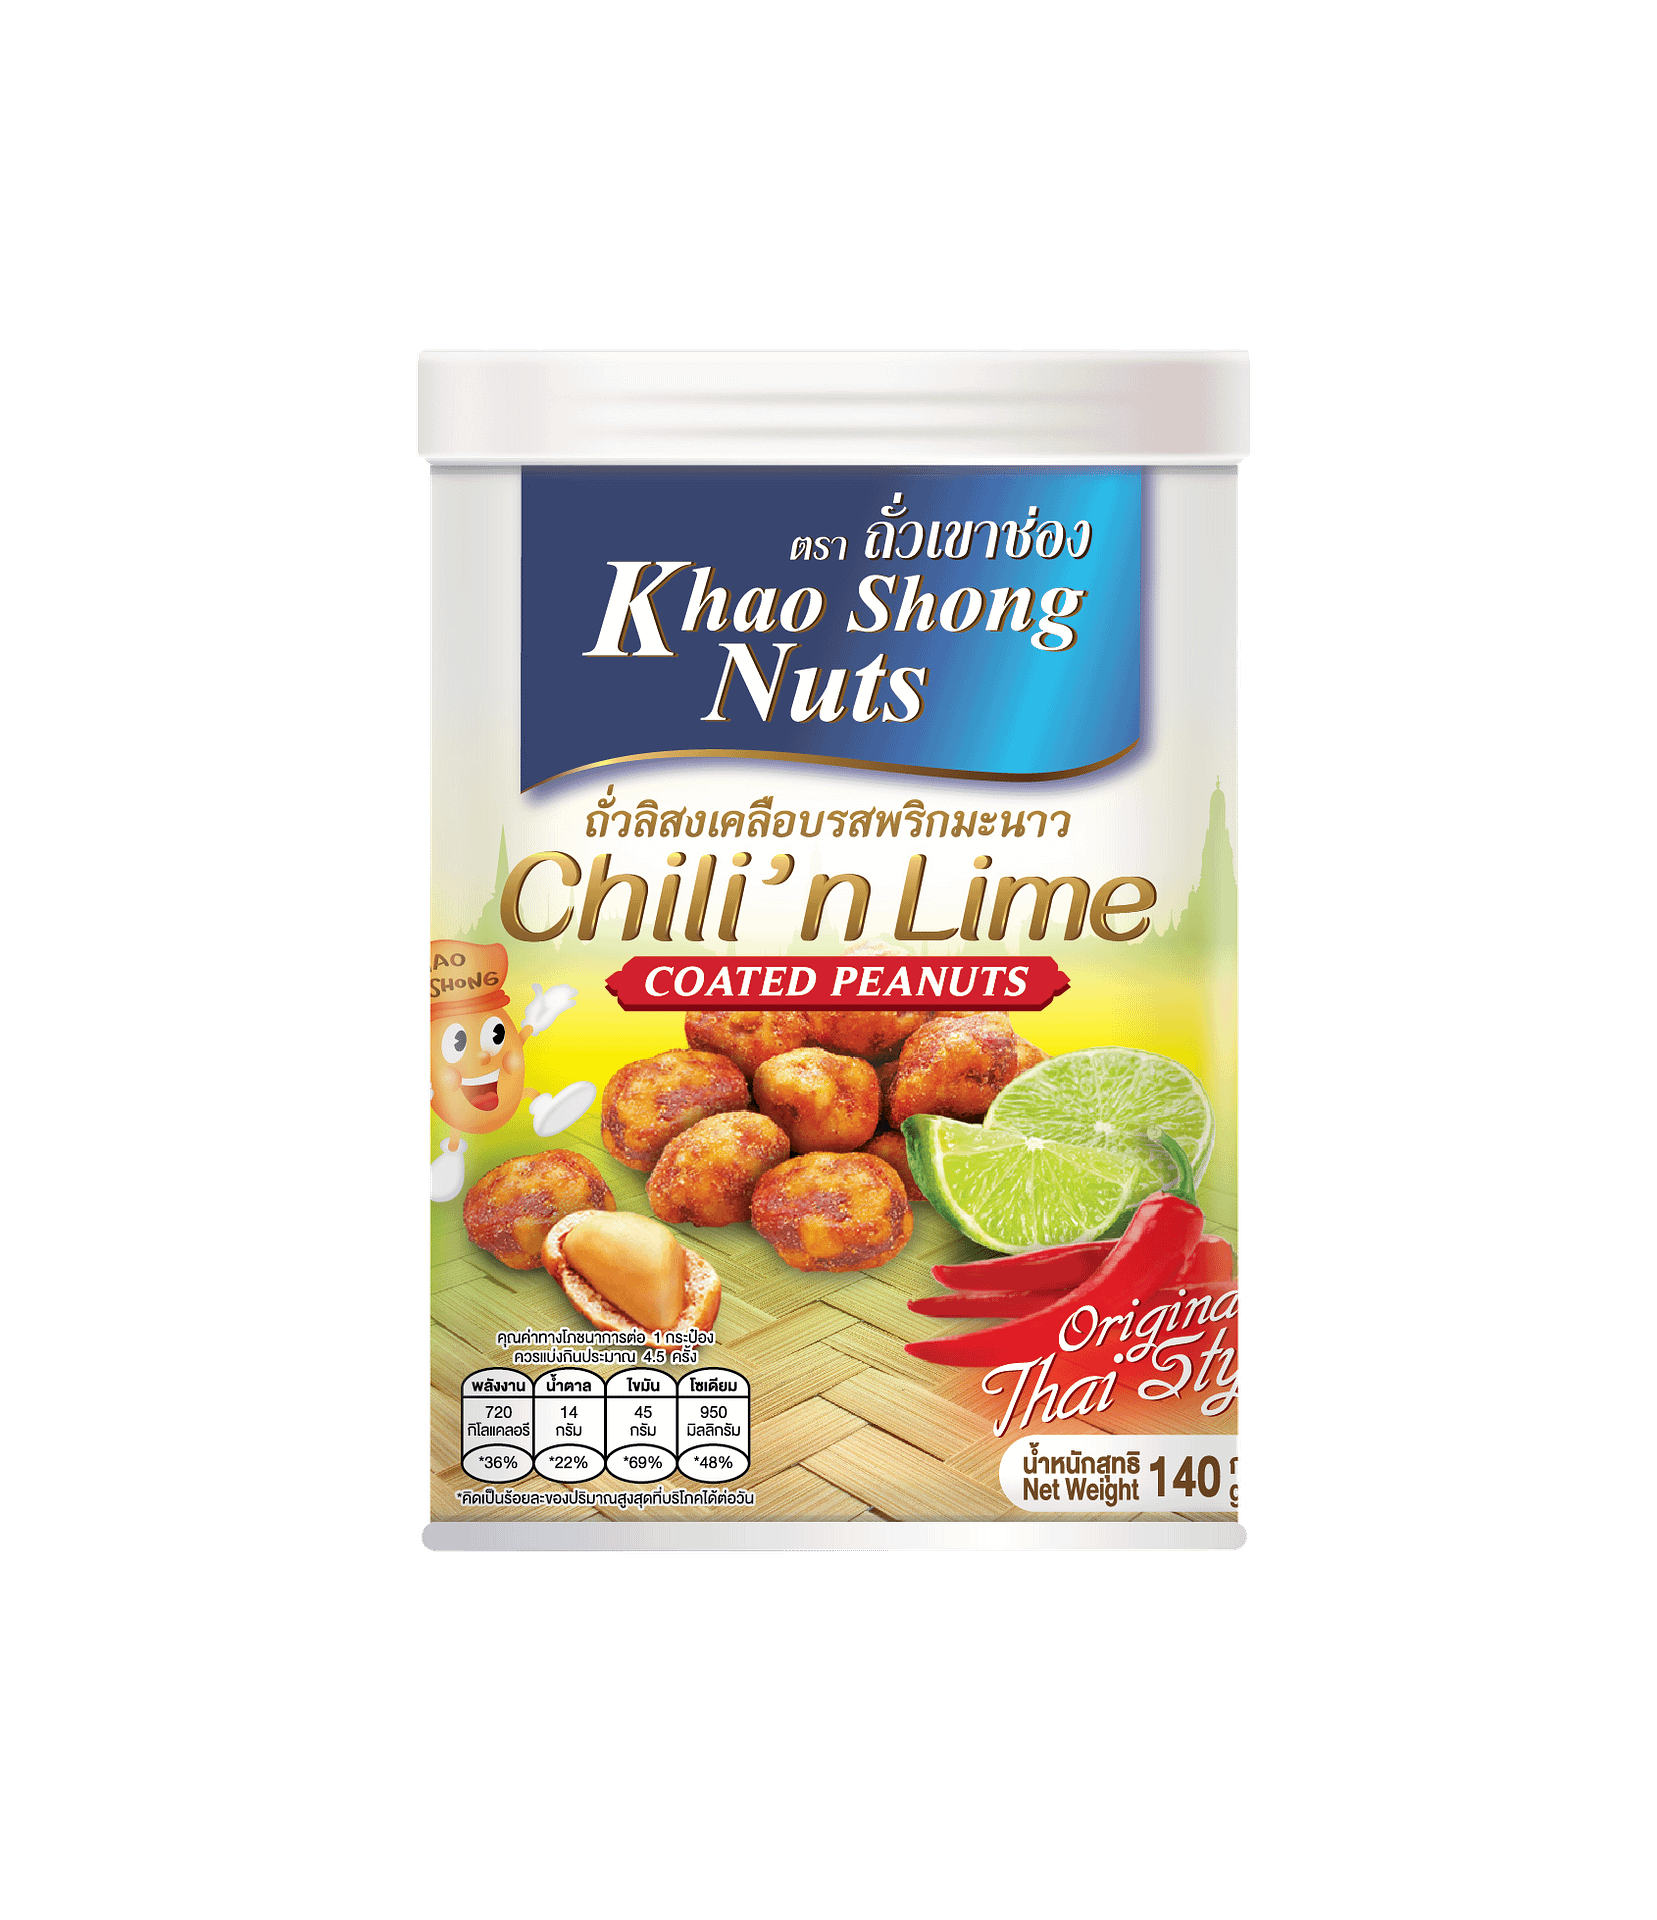 Khao Shong Nuts - Chili'n Lime Coated Peanuts